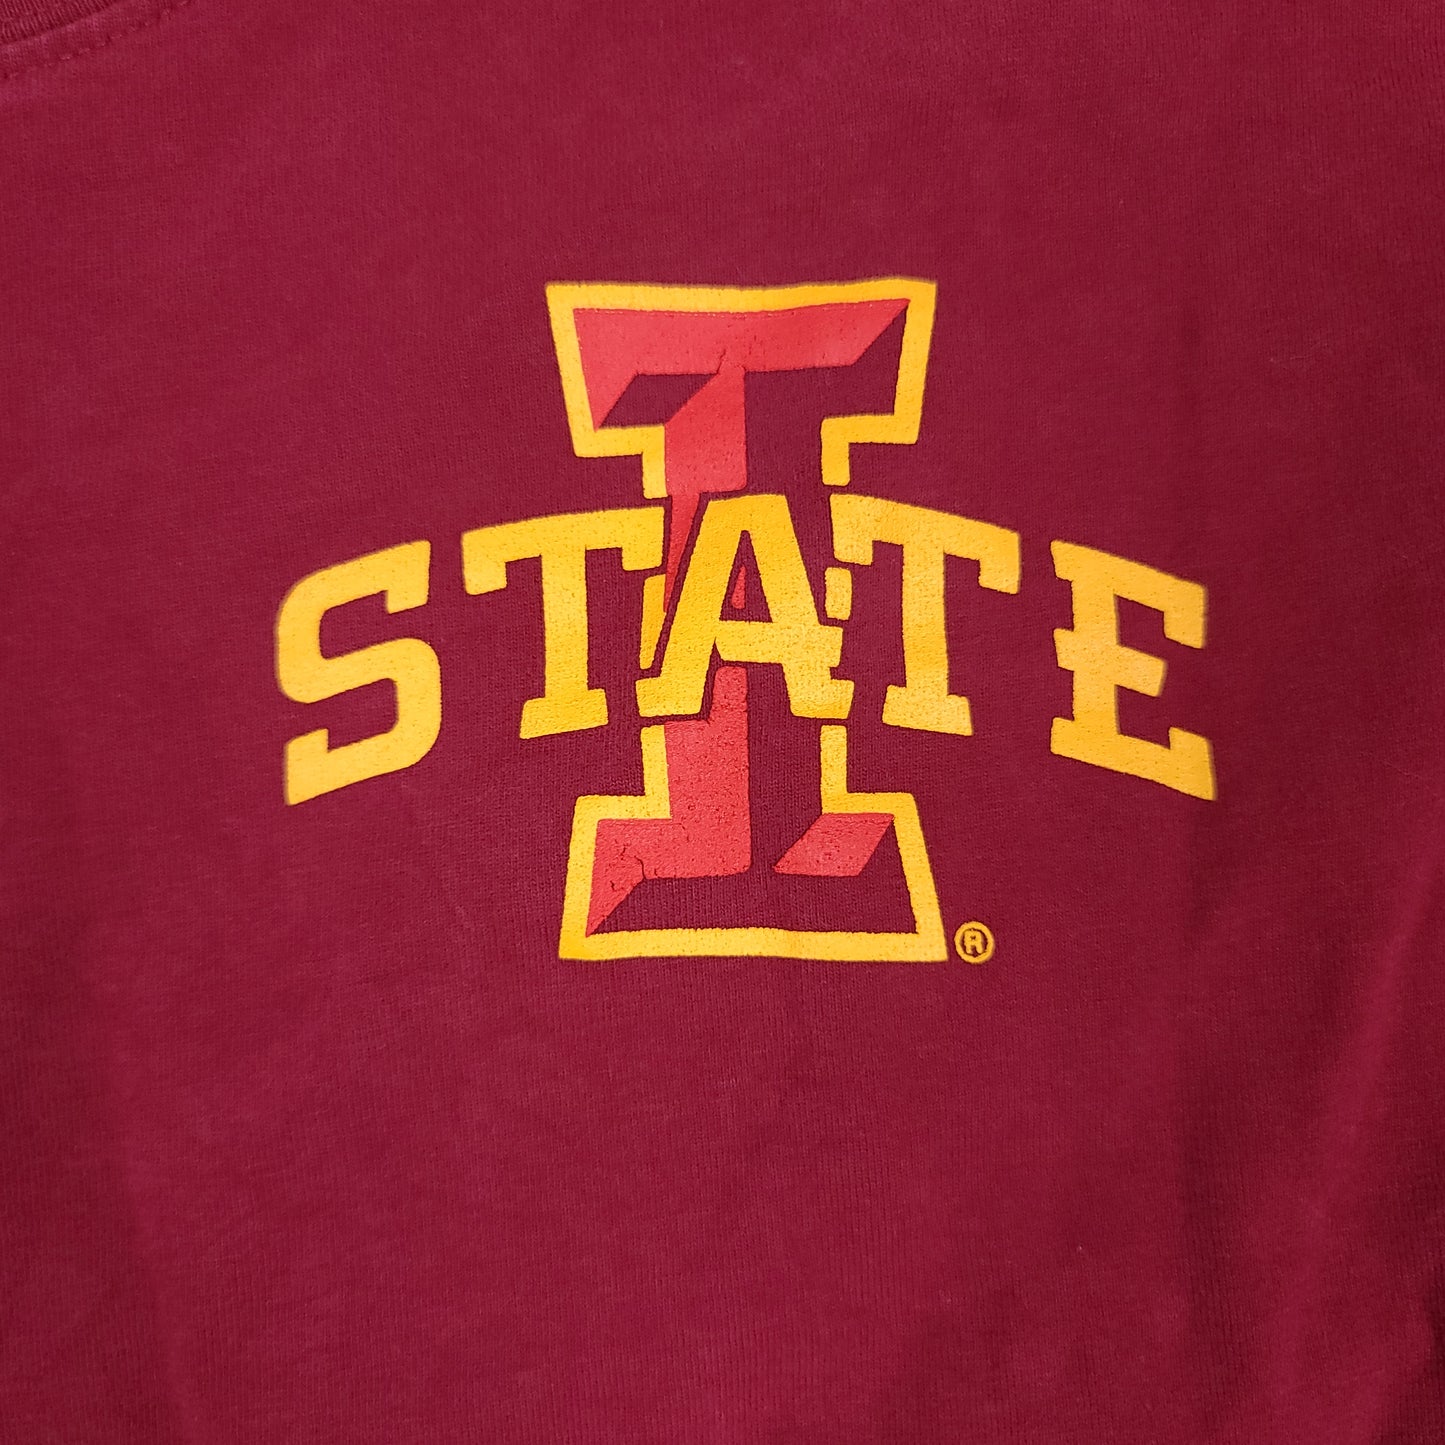 Iowa State University Cyclones Maroon Long Sleeve Shirt